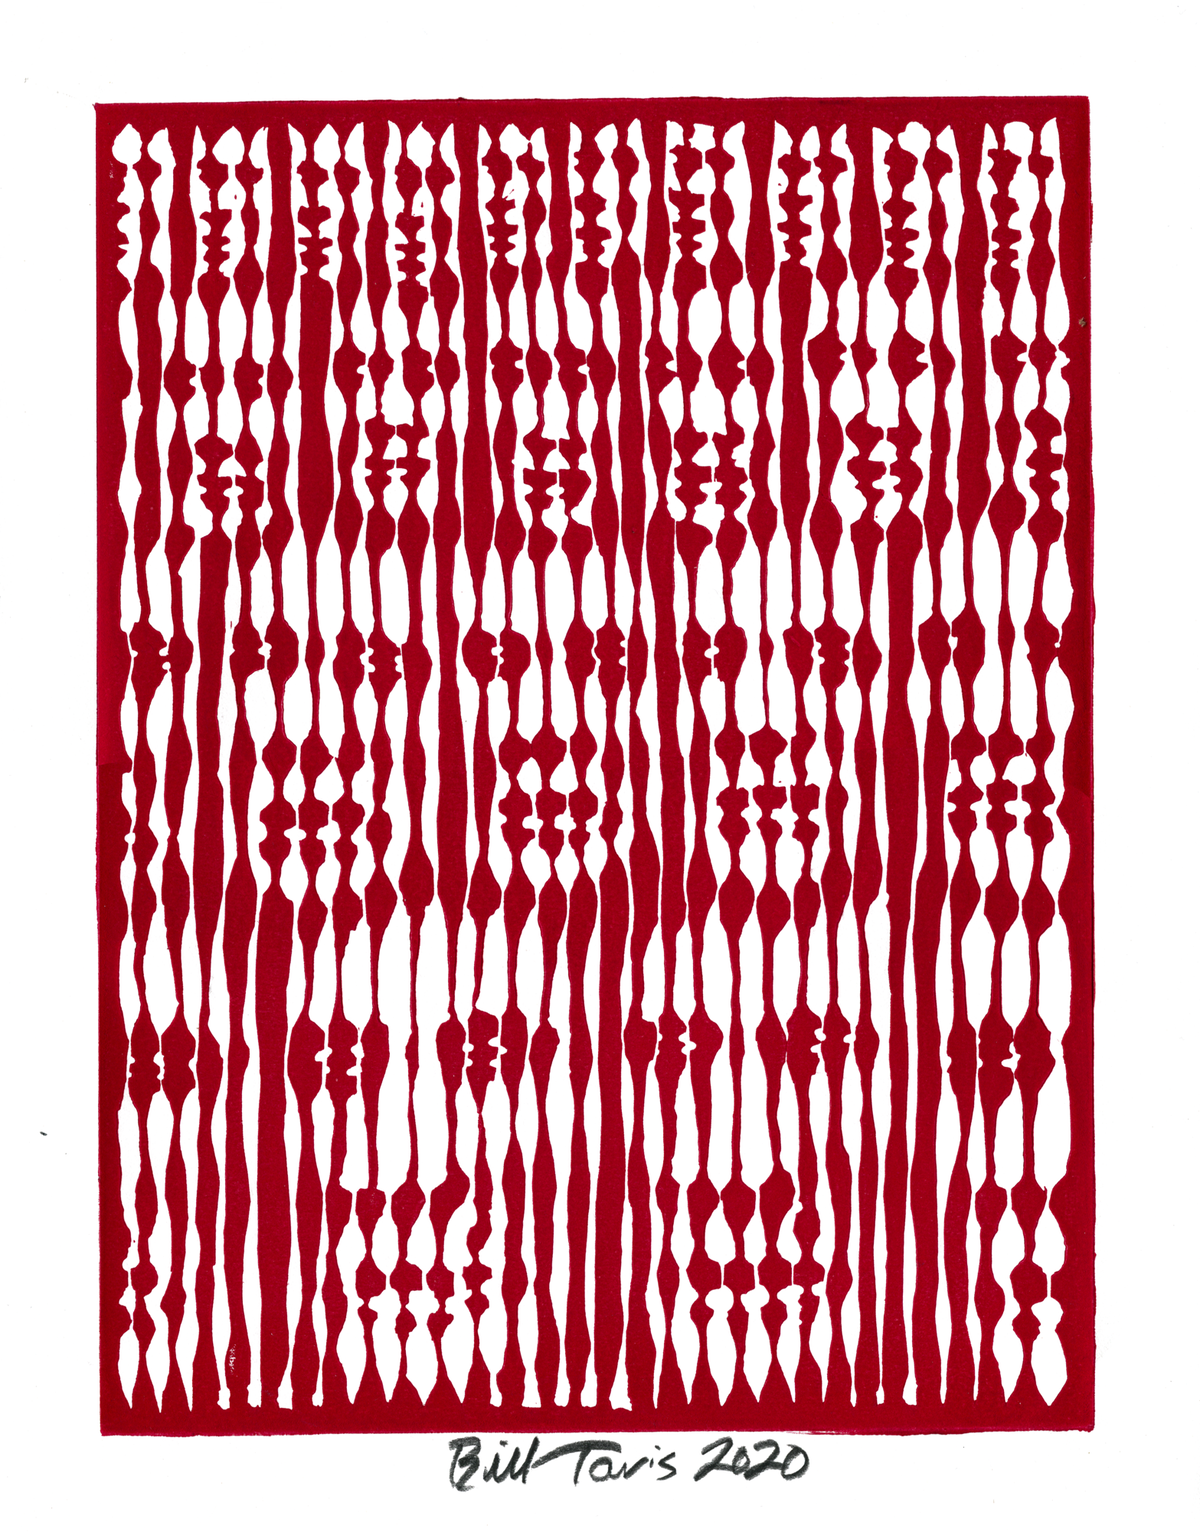 "Descending Faces" linoleum print on 11x14 inch paper, signed open edition